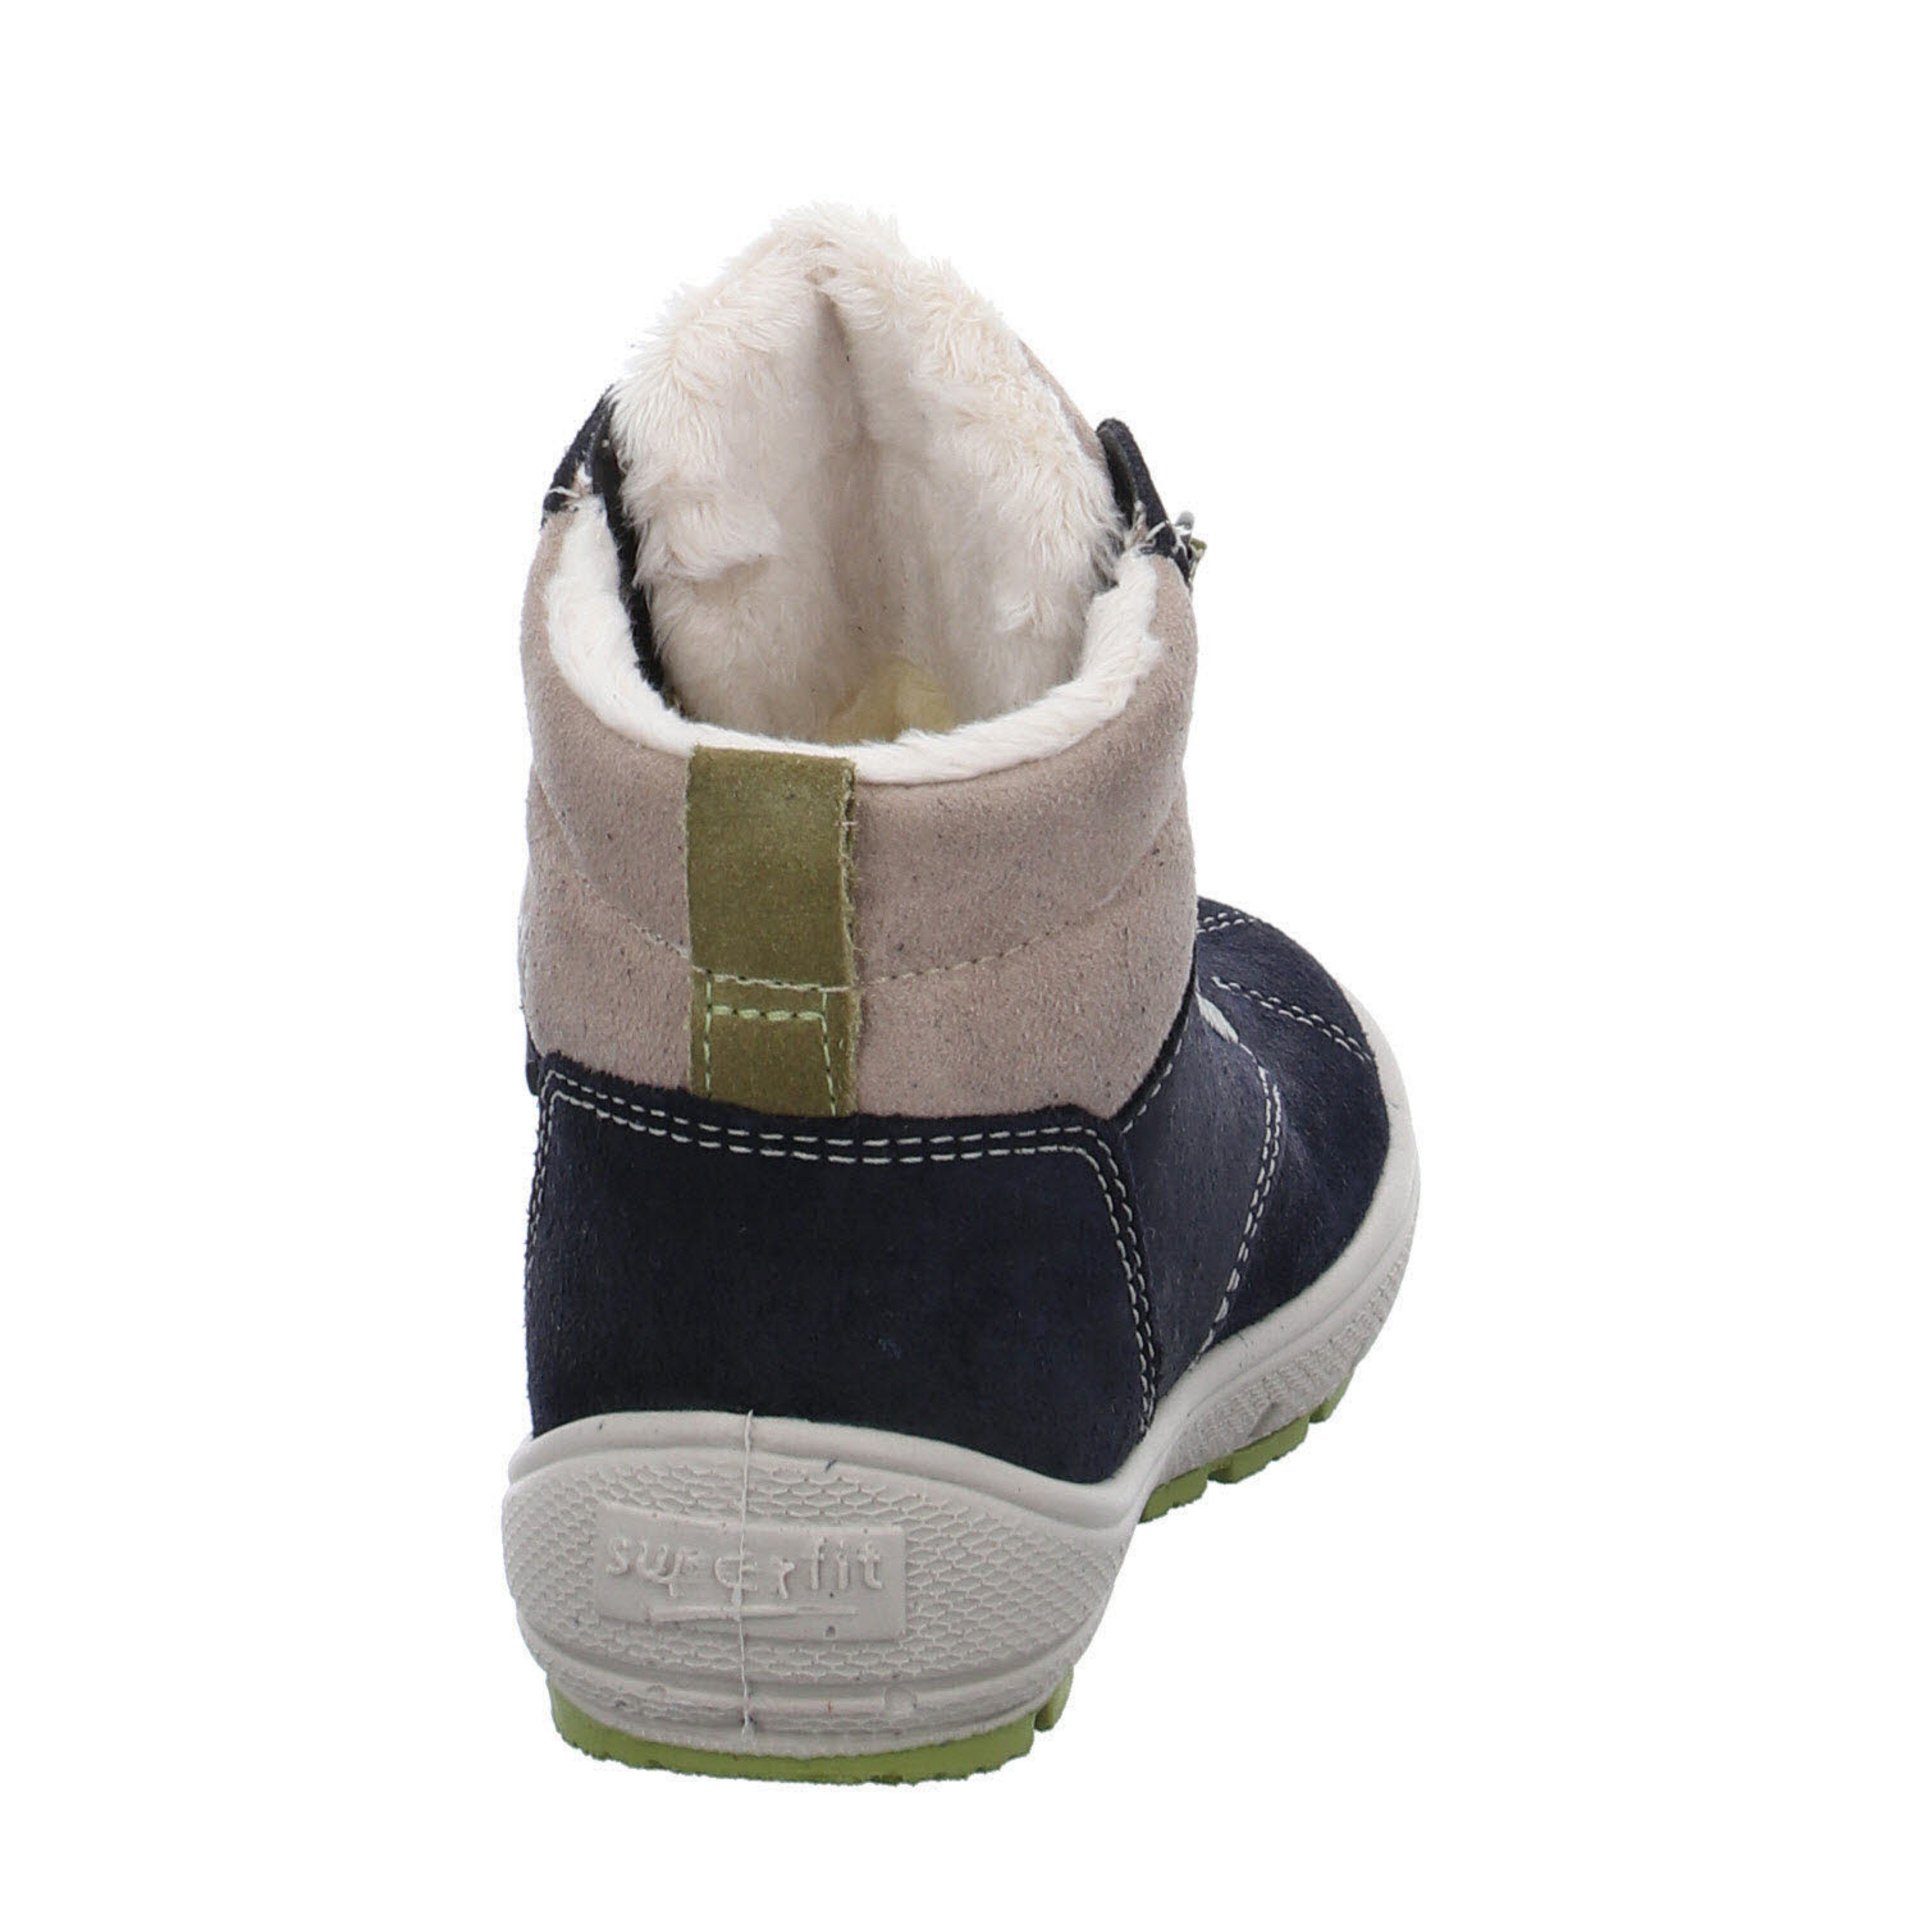 Superfit Baby Lauflernschuhe Leder-/Textilkombination Boots Krabbelschuhe Groovy Lauflernschuh